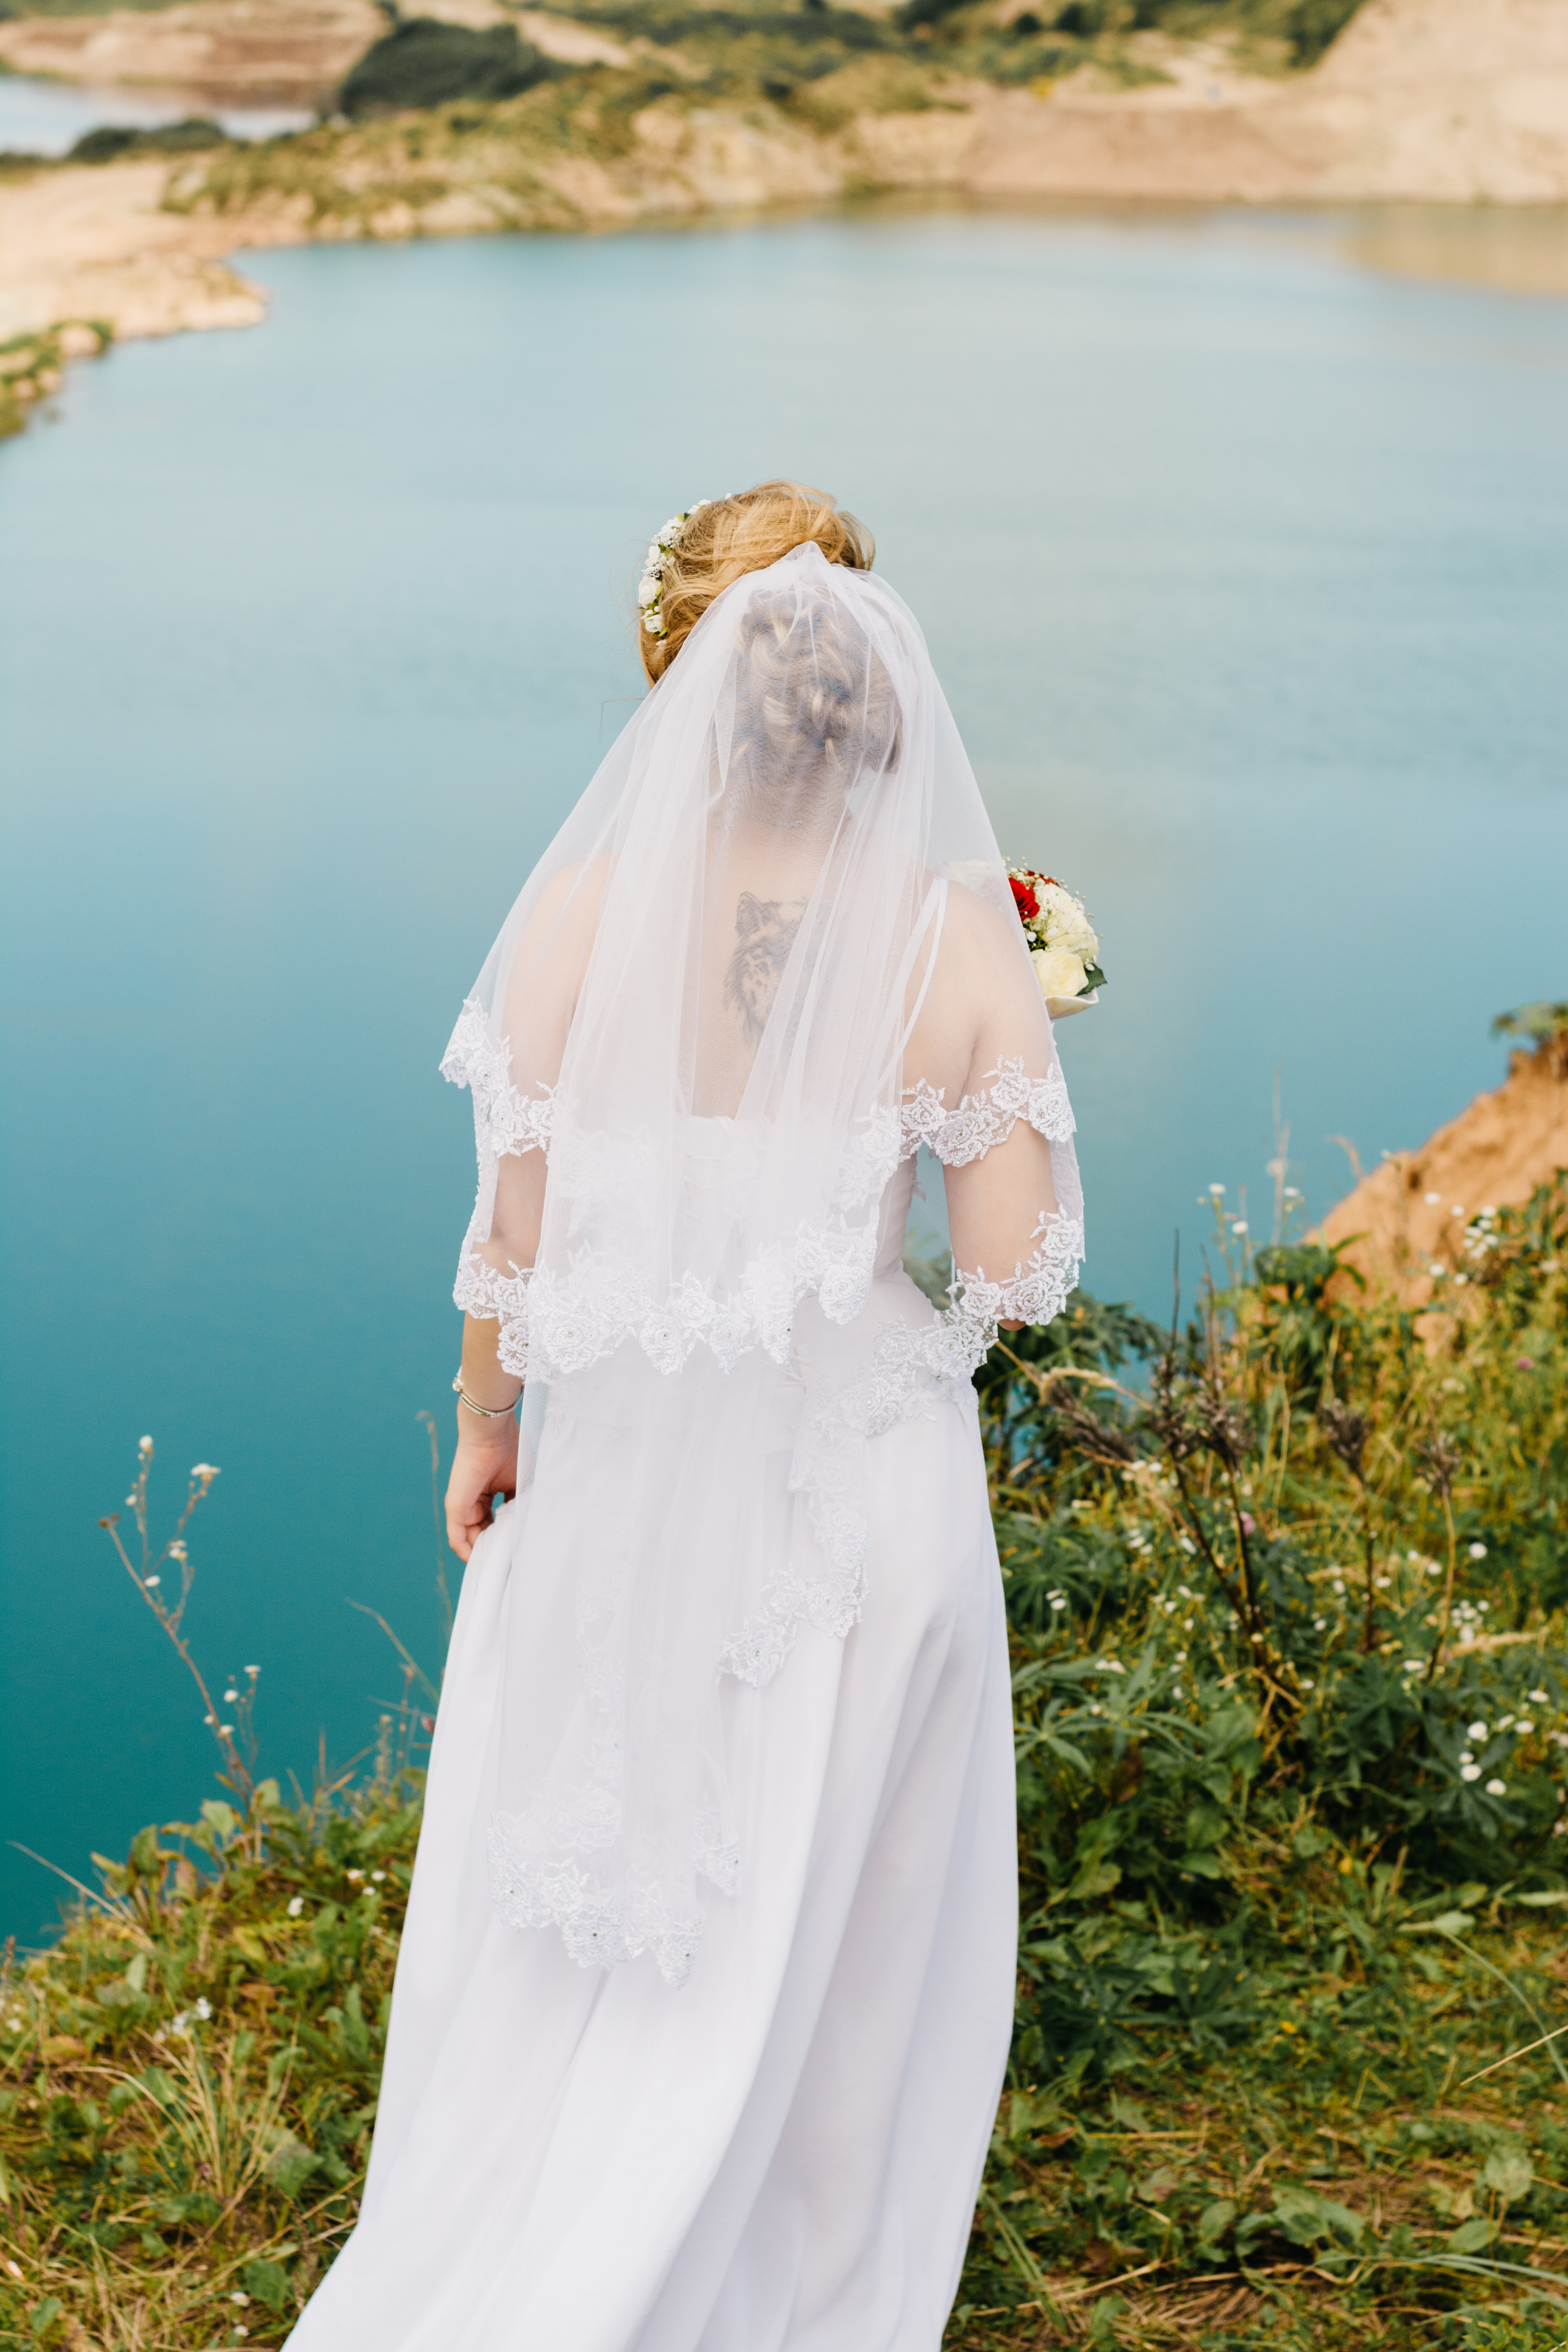 White lace edged wedding veil